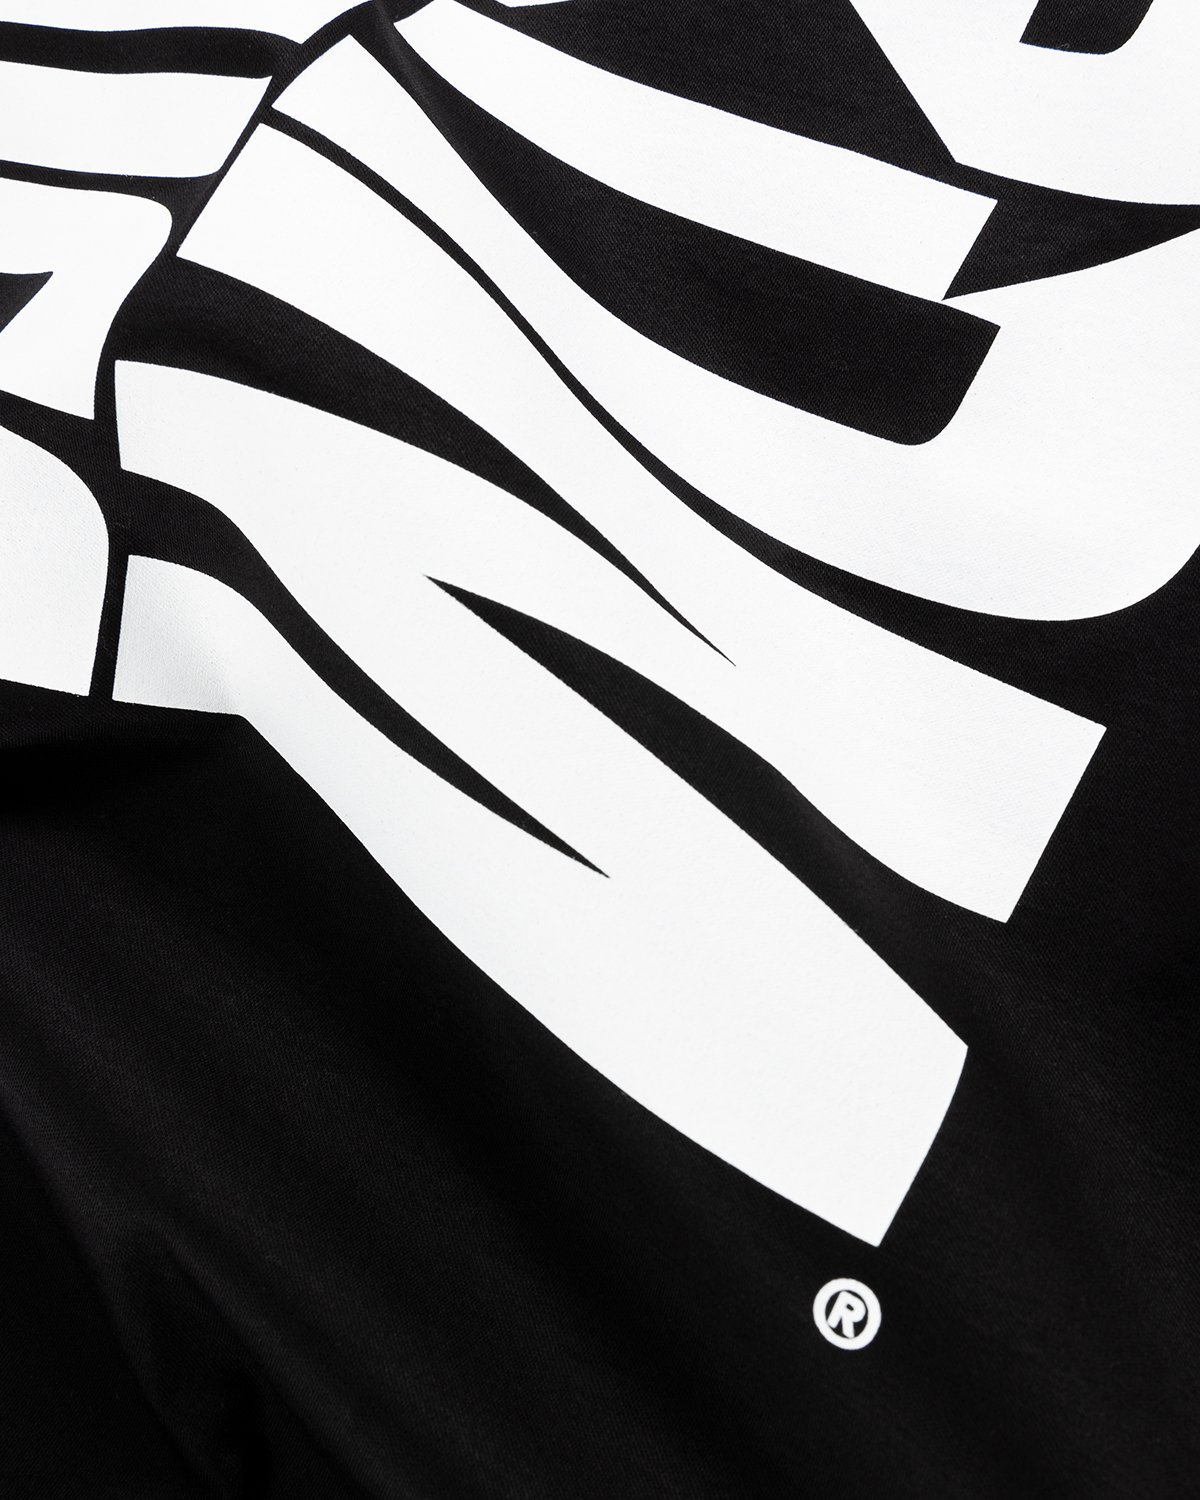 ACRONYM - S24-PR-A T-Shirt Black - Clothing - Black - Image 3